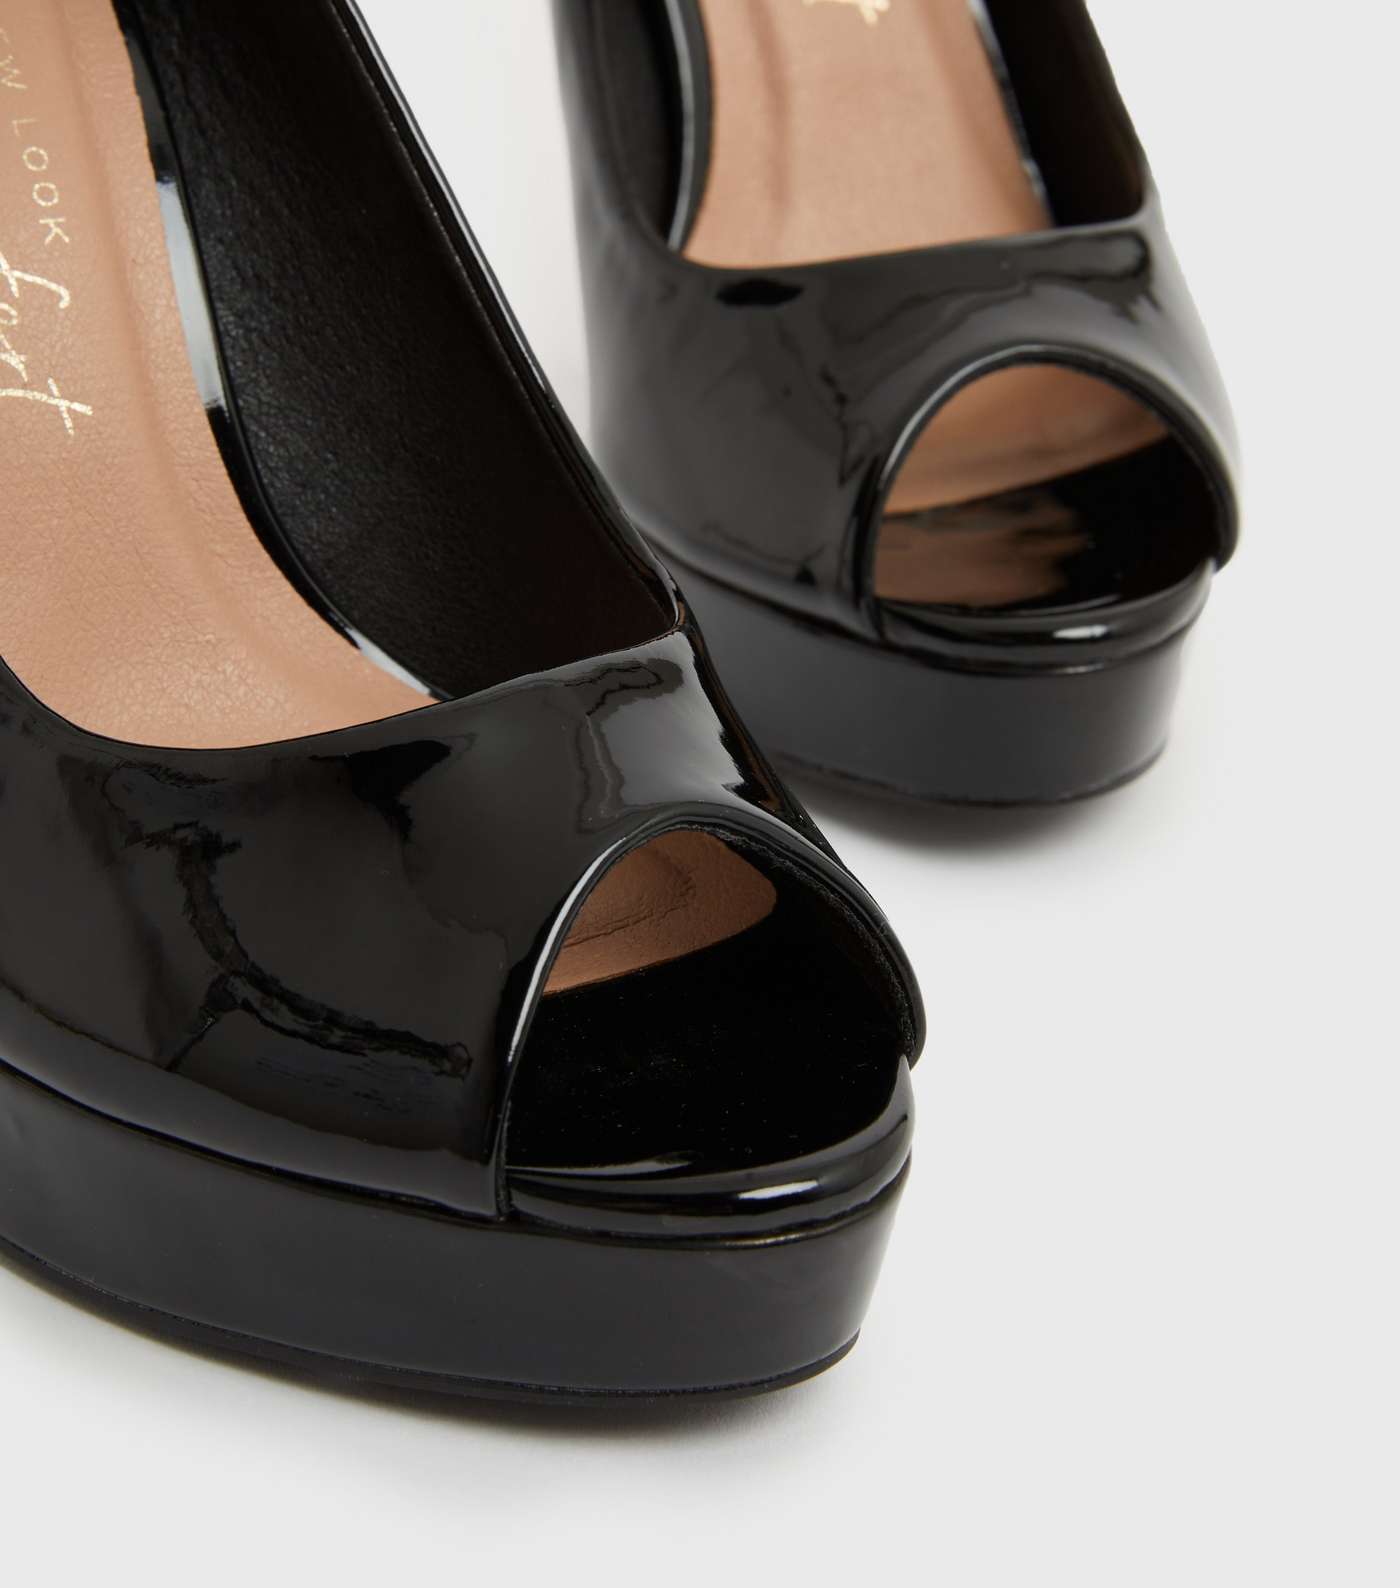 Black Patent Stiletto Heel Platform Court Shoes Image 4